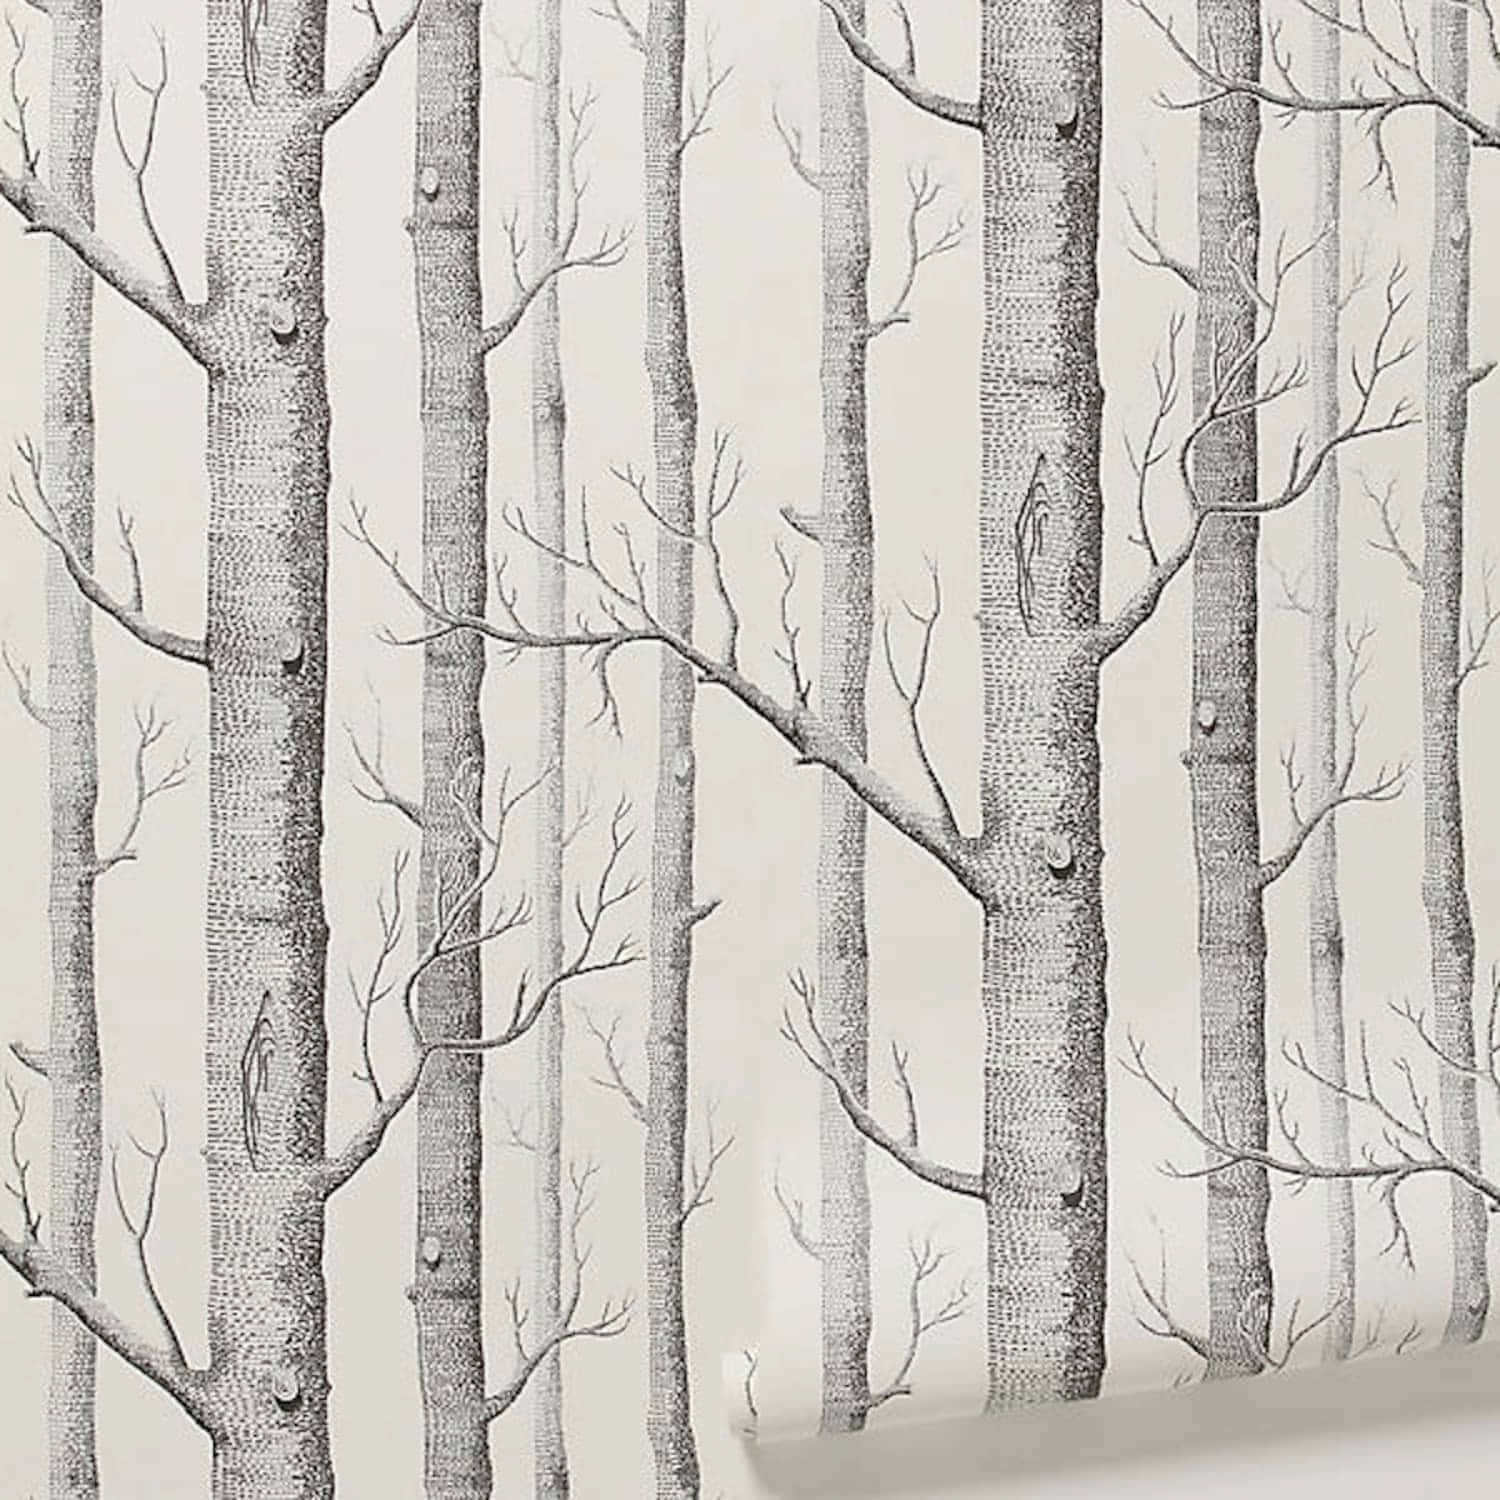 Bare Tree Branches Digital Art Wallpaper